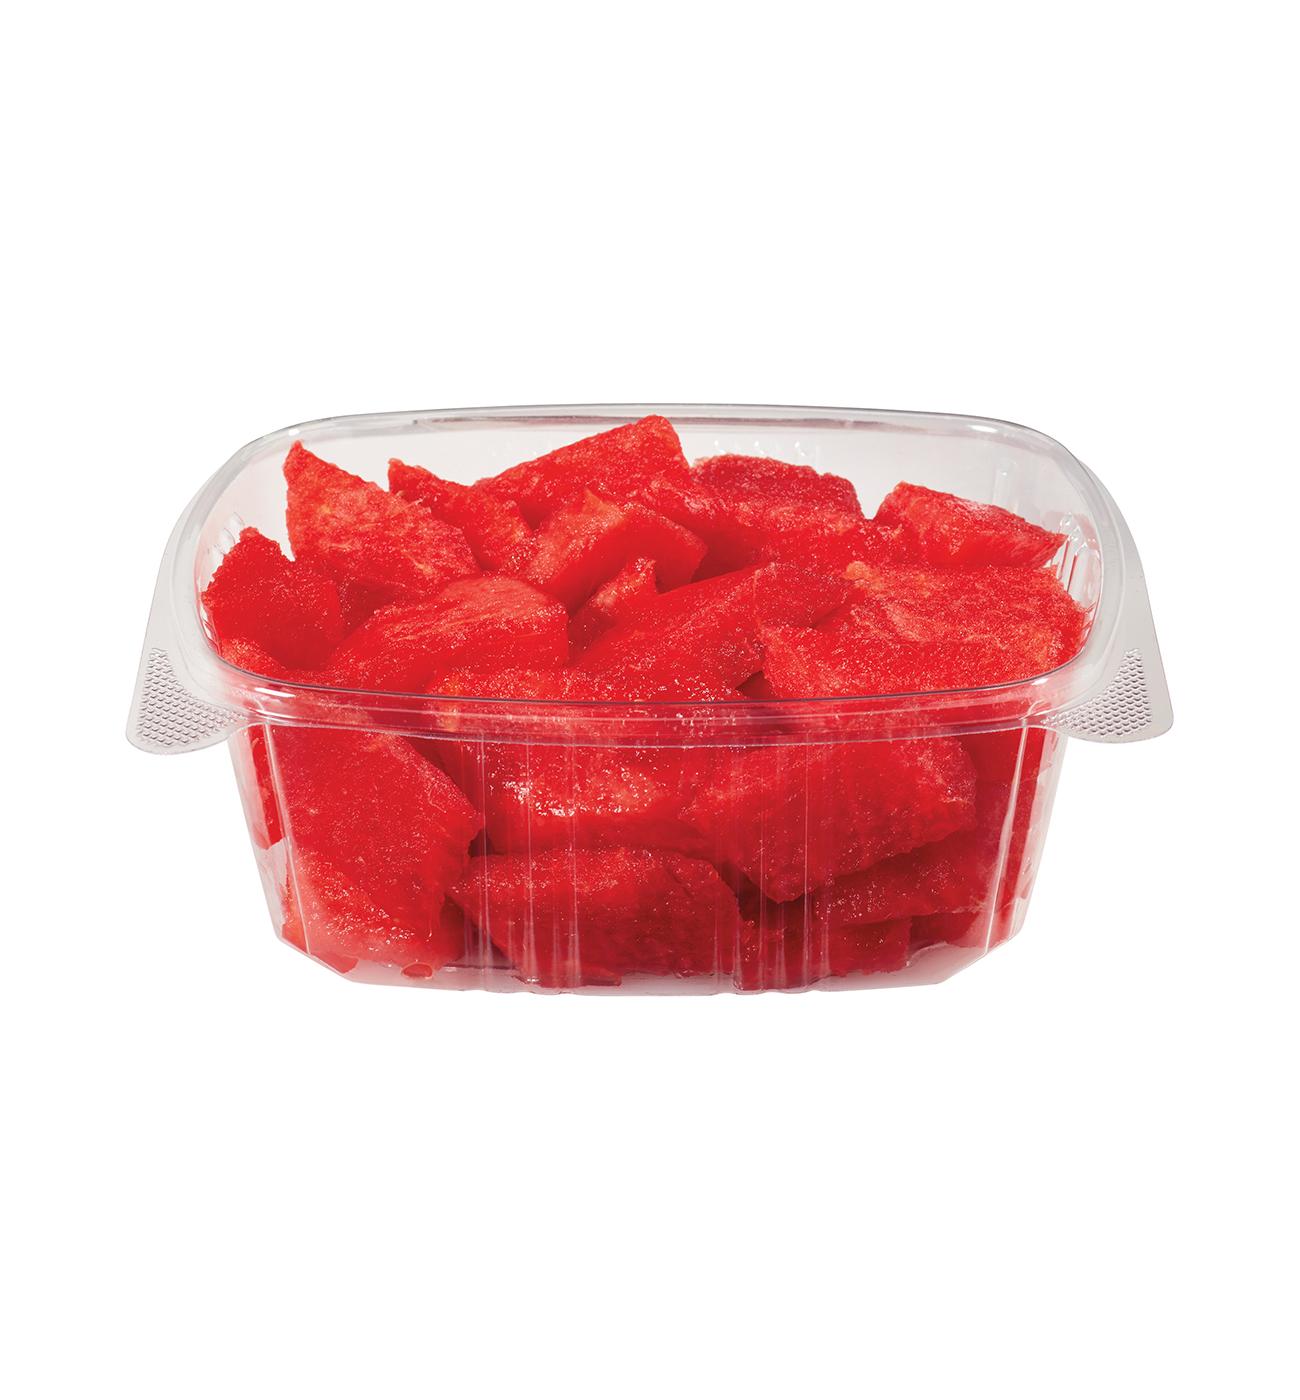 H-E-B Fresh Cut Seedless Watermelon - Large; image 2 of 2